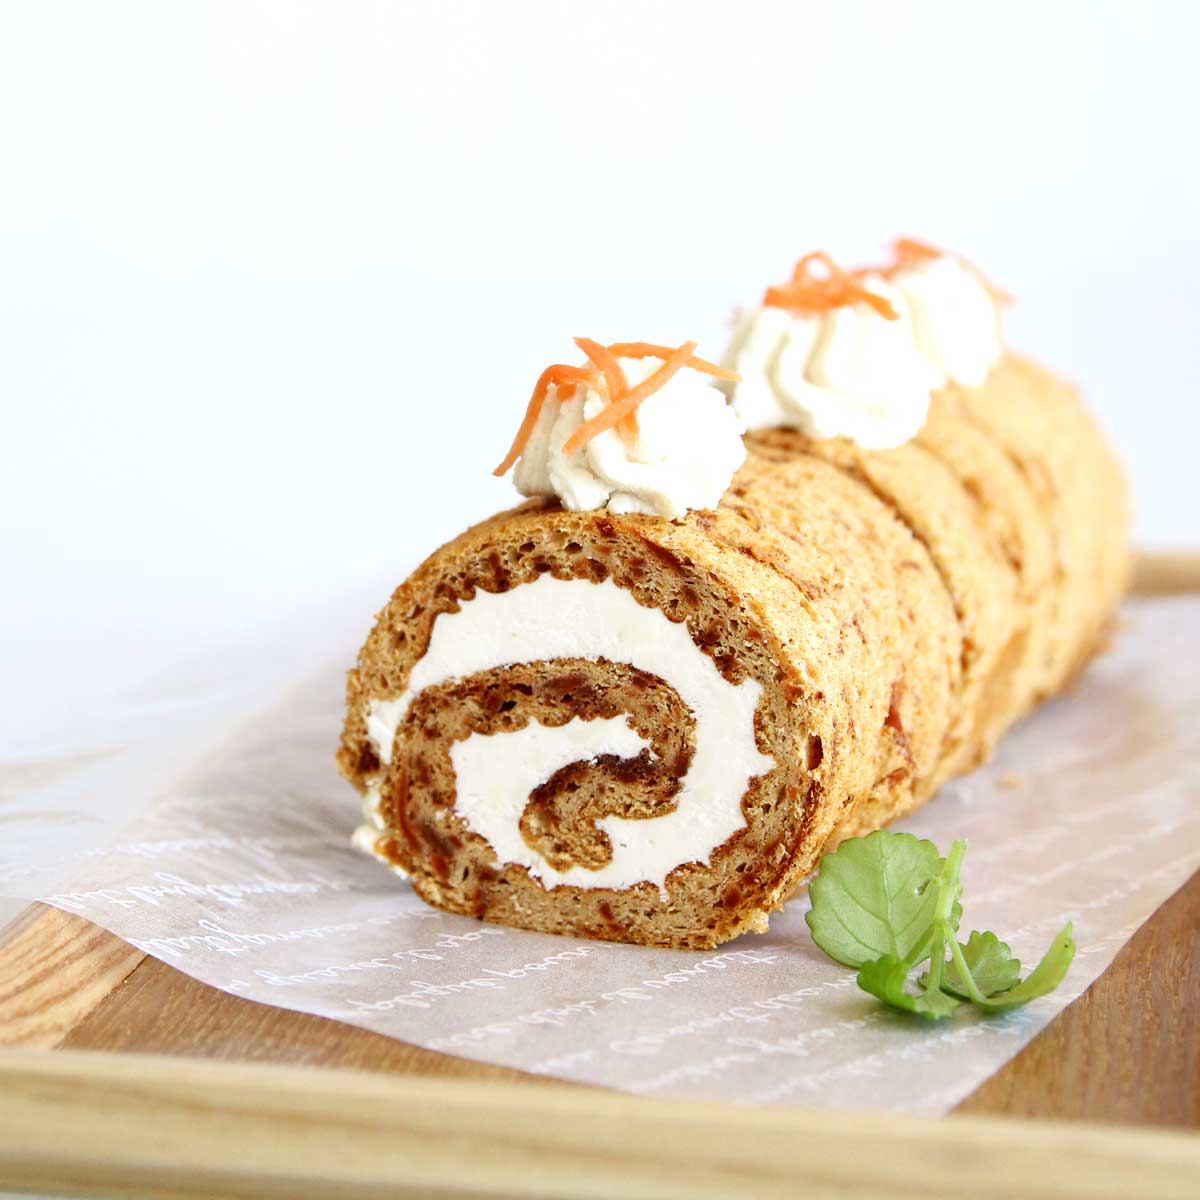 Gluten Free Carrot Swiss Roll Cake Recipe to Make for Easter - Strawberry Japanese Roll Cake